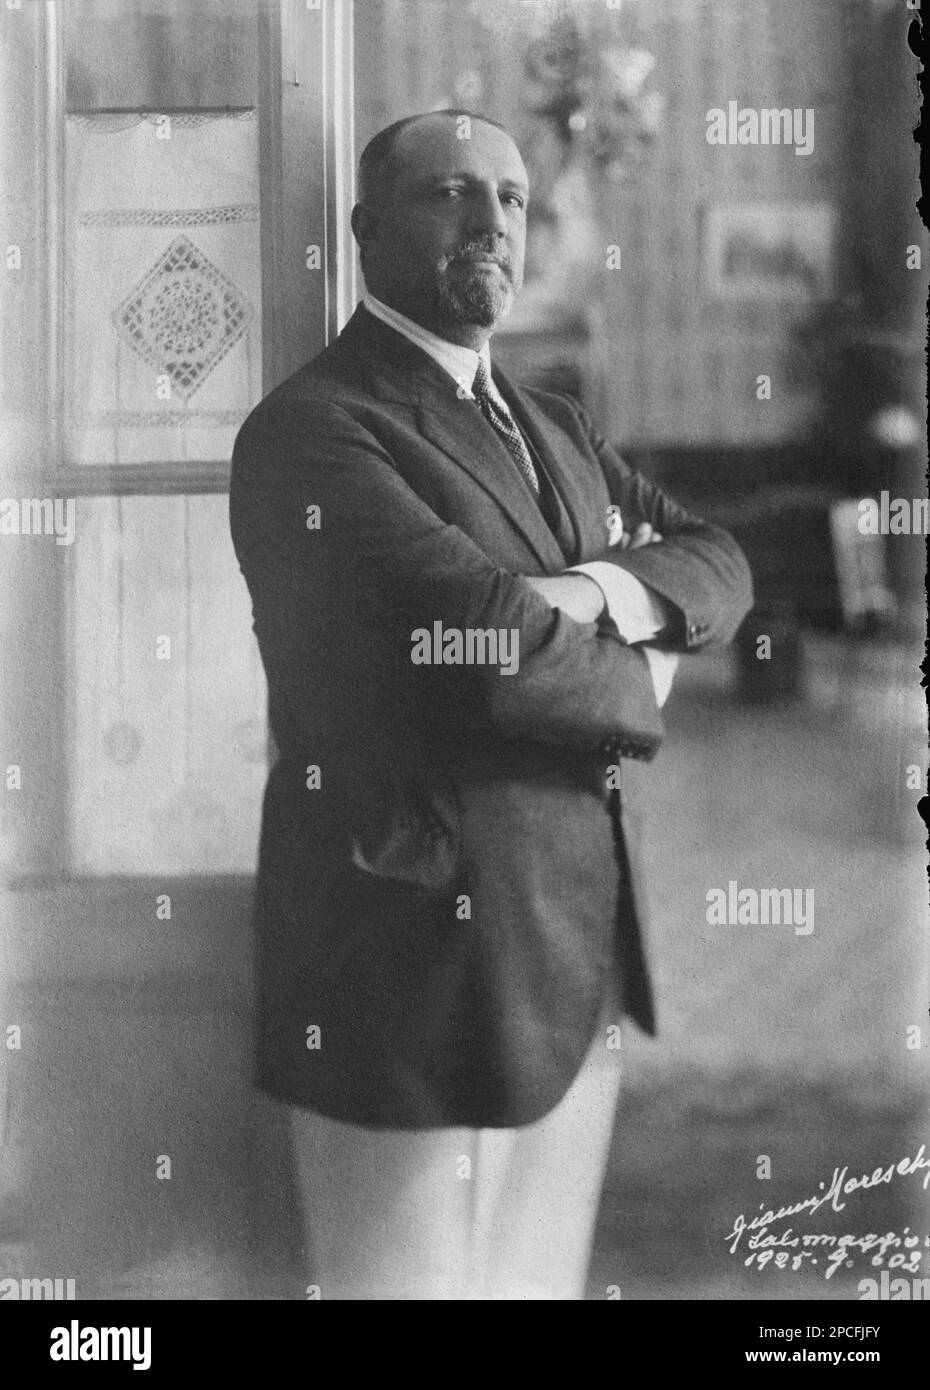 1925 , Salsomaggiore terme , Parme , ITALIE : le comte italien GIUSEPPE VOLPI di MISURATA ( 1877 - 1947 ) , responsable de la dette commerciale avec l'Italie et les Etats-Unis . Photo de Gianni Maresca , Salsomaggiore - Nobiltà italiana - noblesse - ritratto - portrait - barbe - barba - collier - colletto - cravate - cravatta - conte - FASCISMO - FASCISTA - FASCISTE - FASCISME - INDUSTRIEL - POLICO - POLITIQUE - POLITIQUE ---- Archivio GBB Banque D'Images